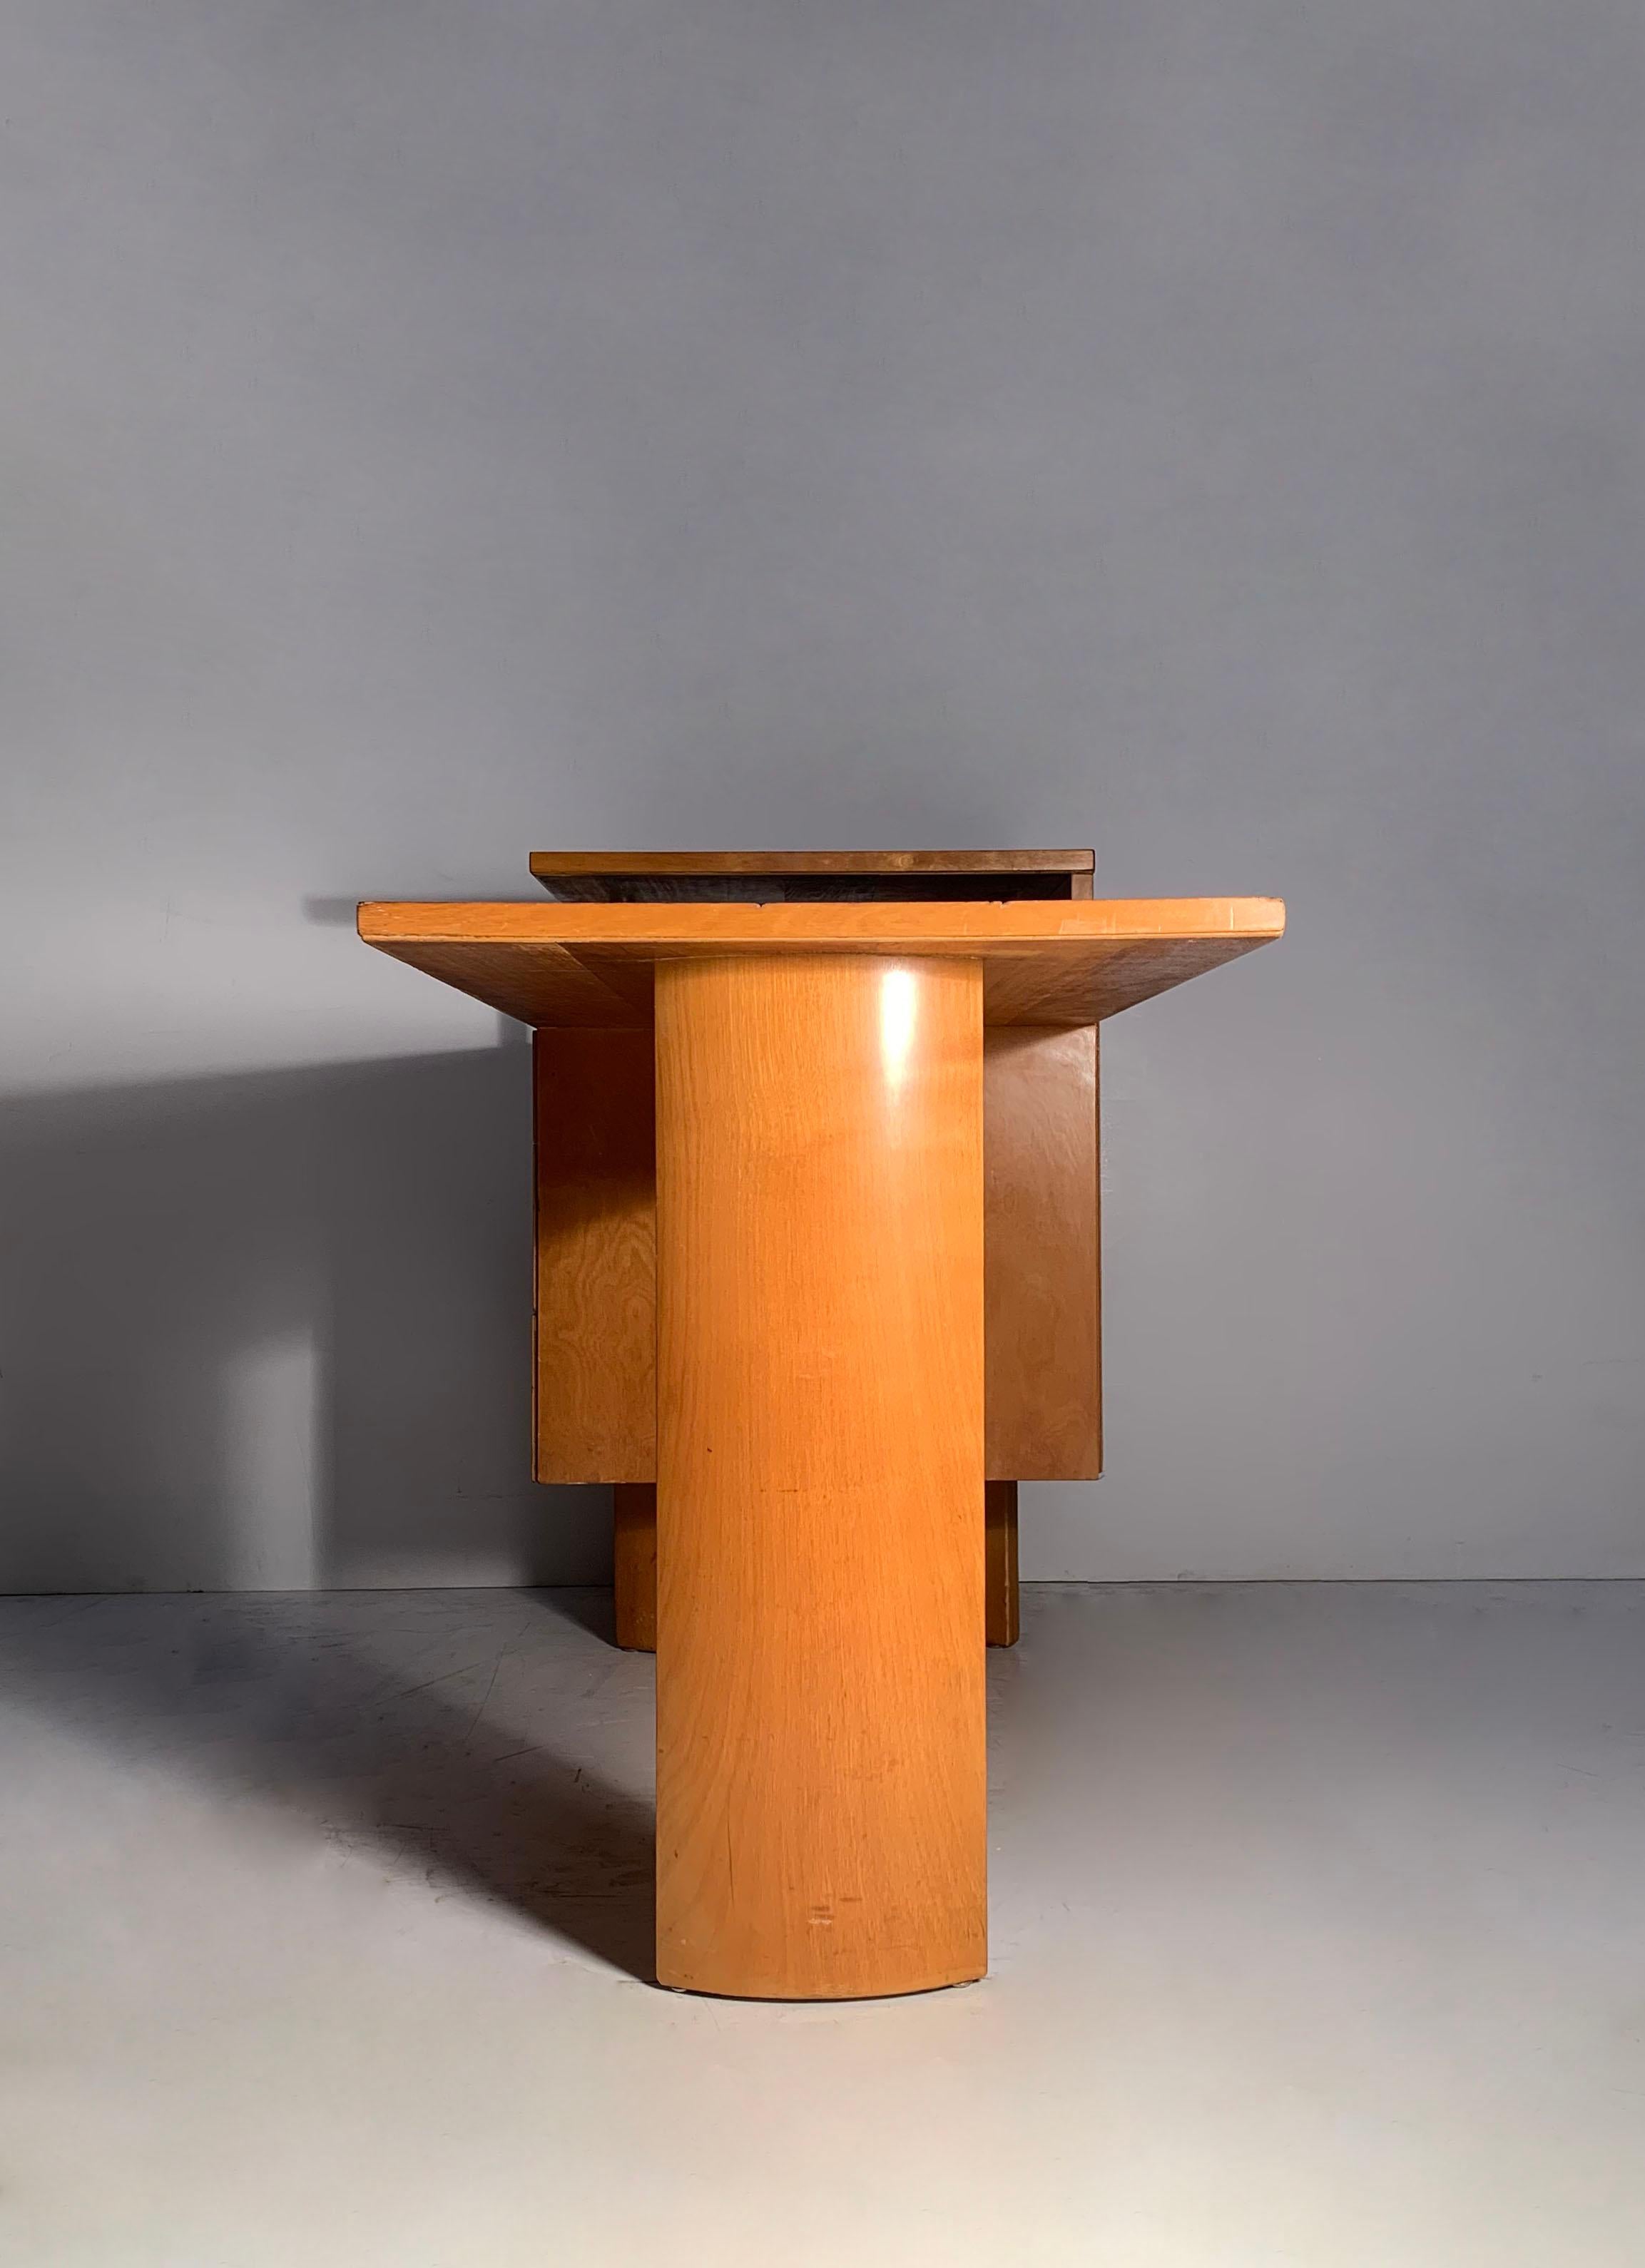 Petite Eliel Saarinen Deco Desk In Good Condition For Sale In Chicago, IL